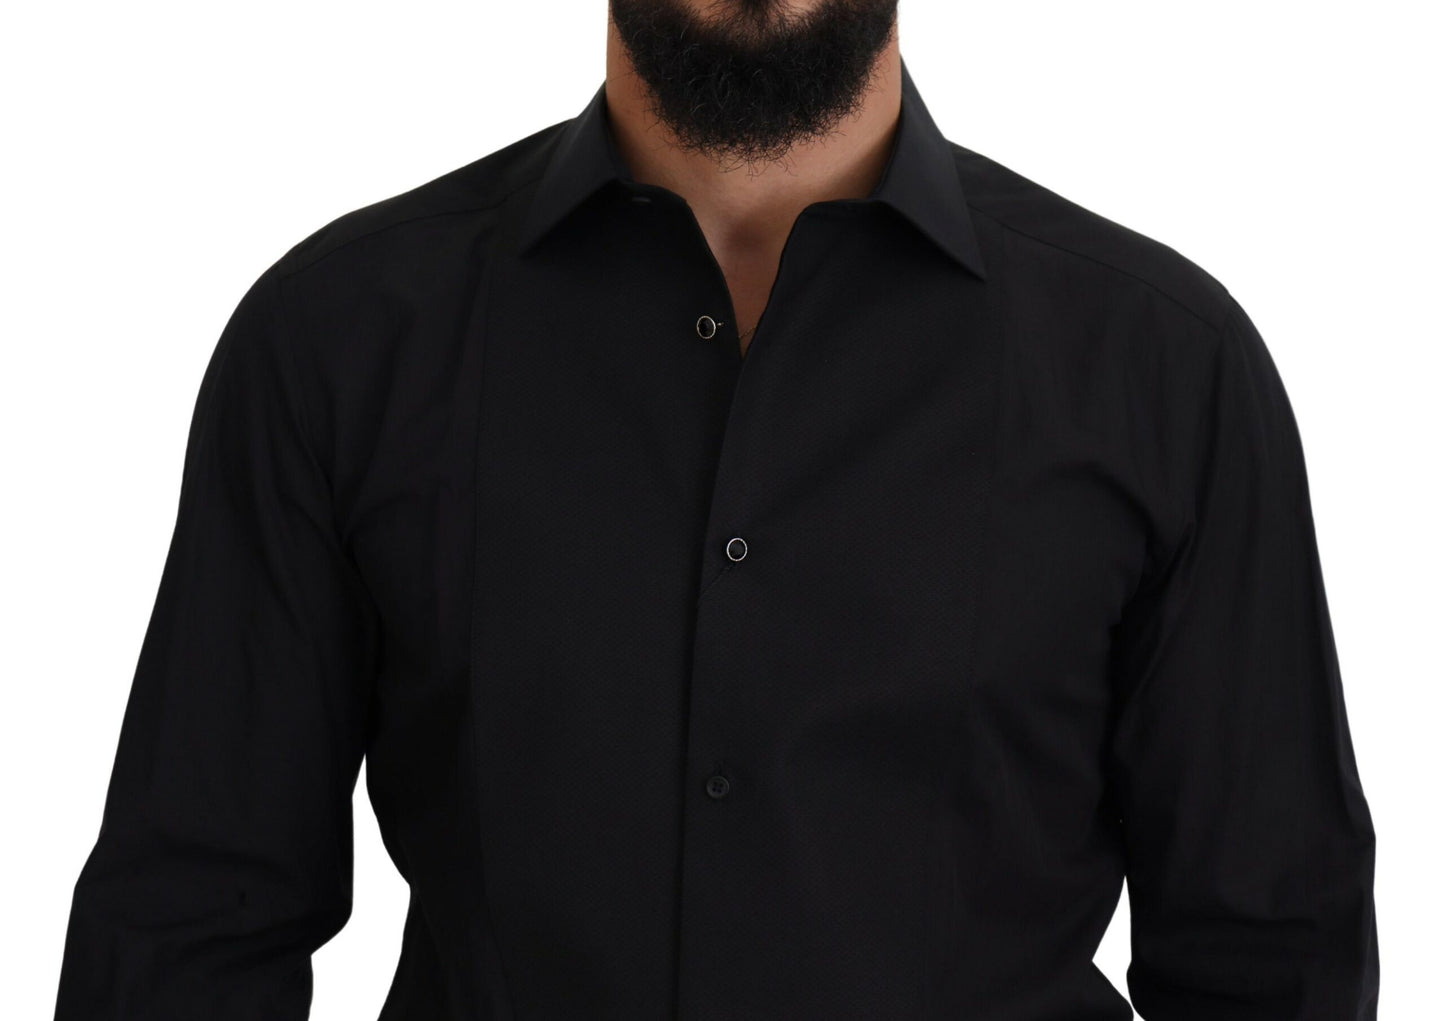 Elegant Black Formal Long Sleeve Shirt